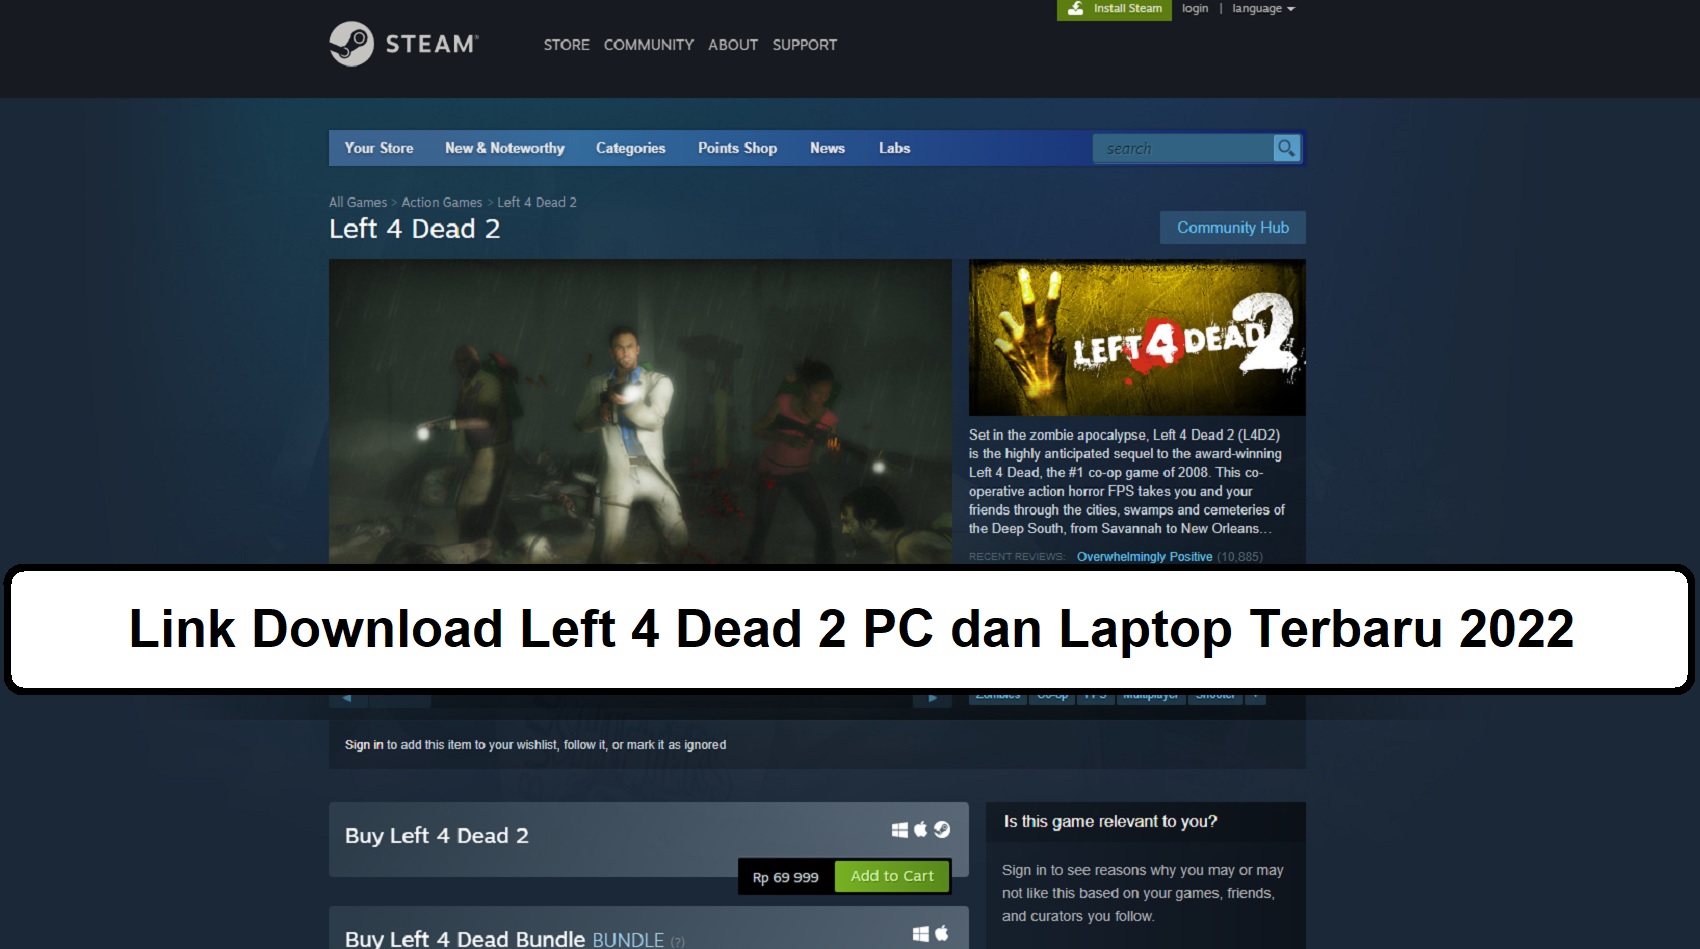 Link Download Left 4 Dead 2 PC dan Laptop Terbaru 2022